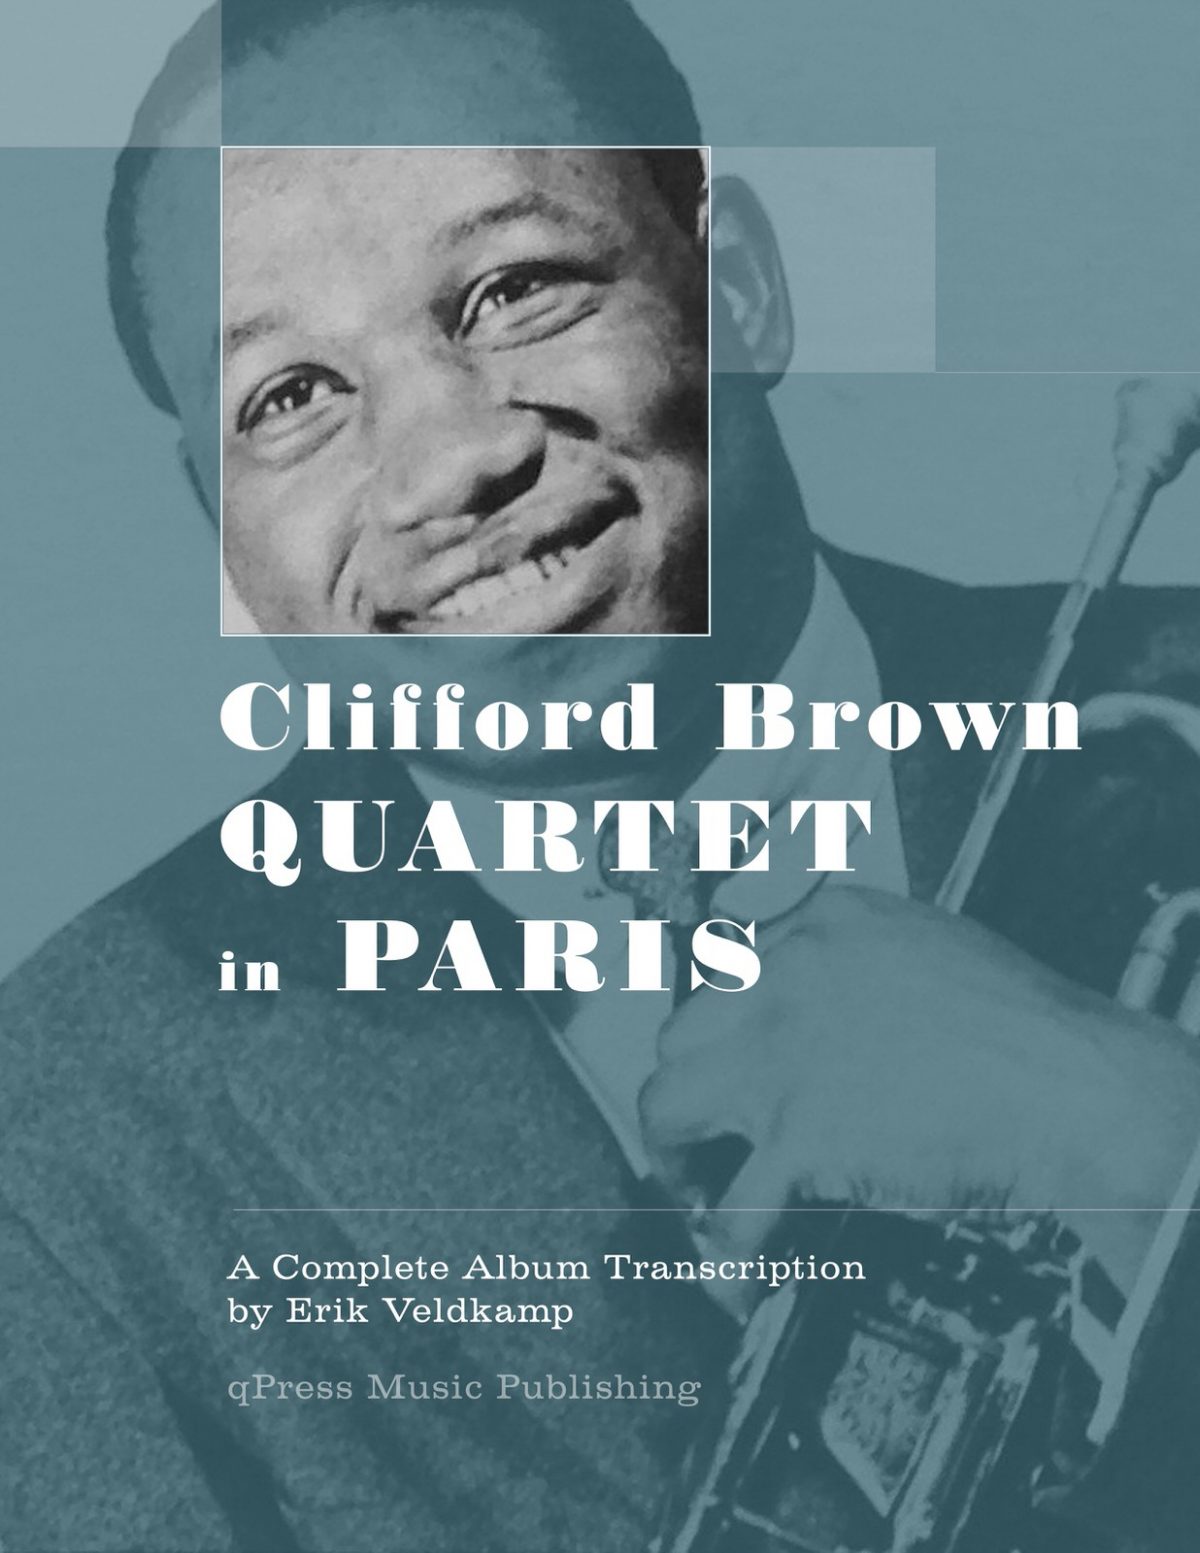 The Clifford Brown Quartet in Paris